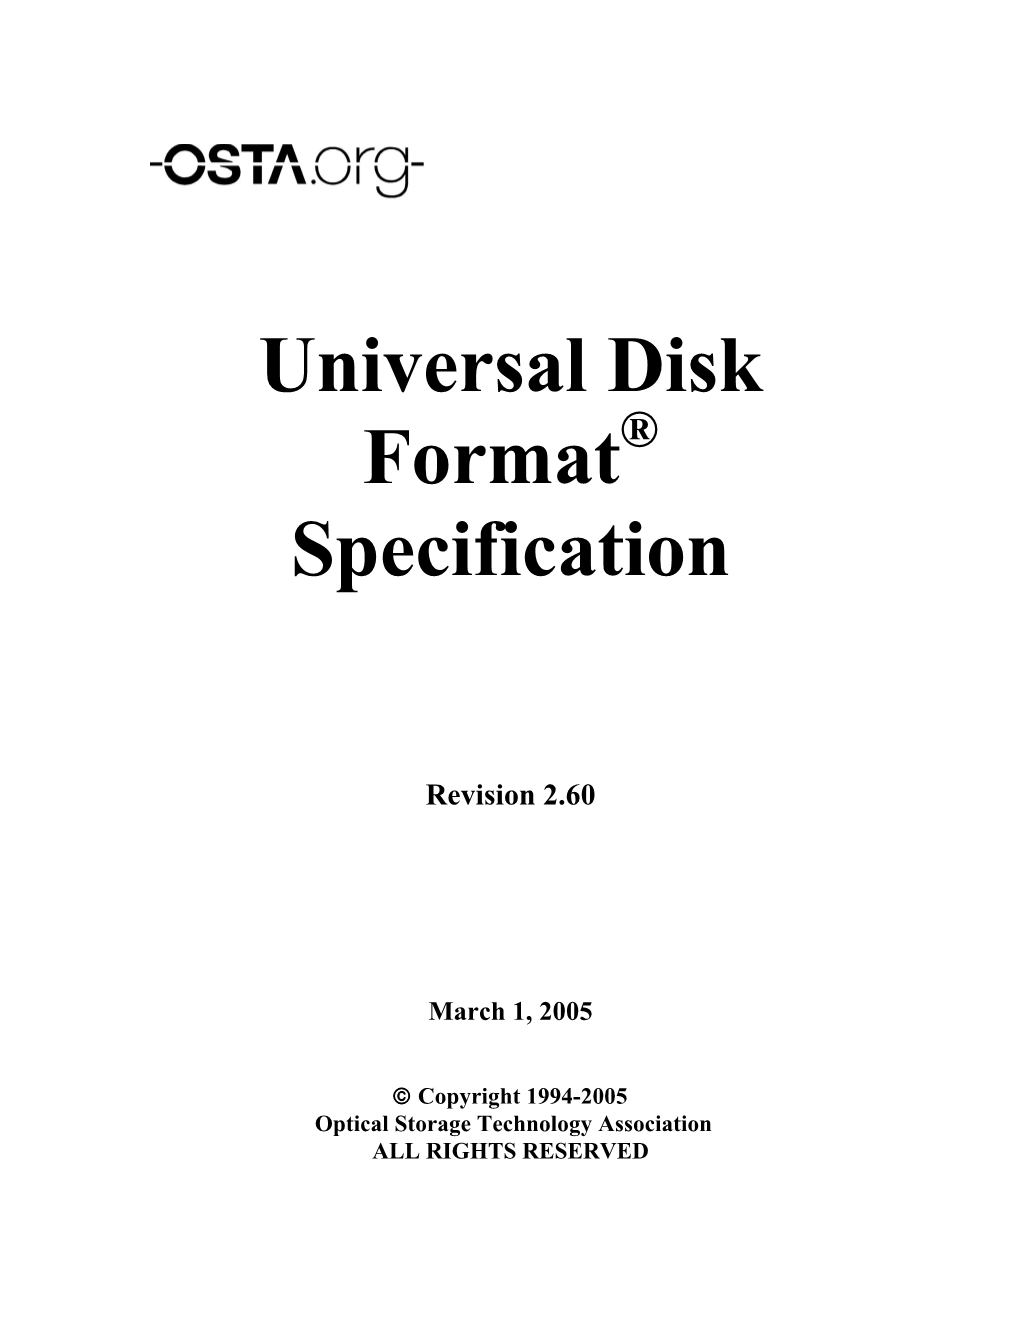 OSTA Universal Disk Format Specification Rev. 2.60